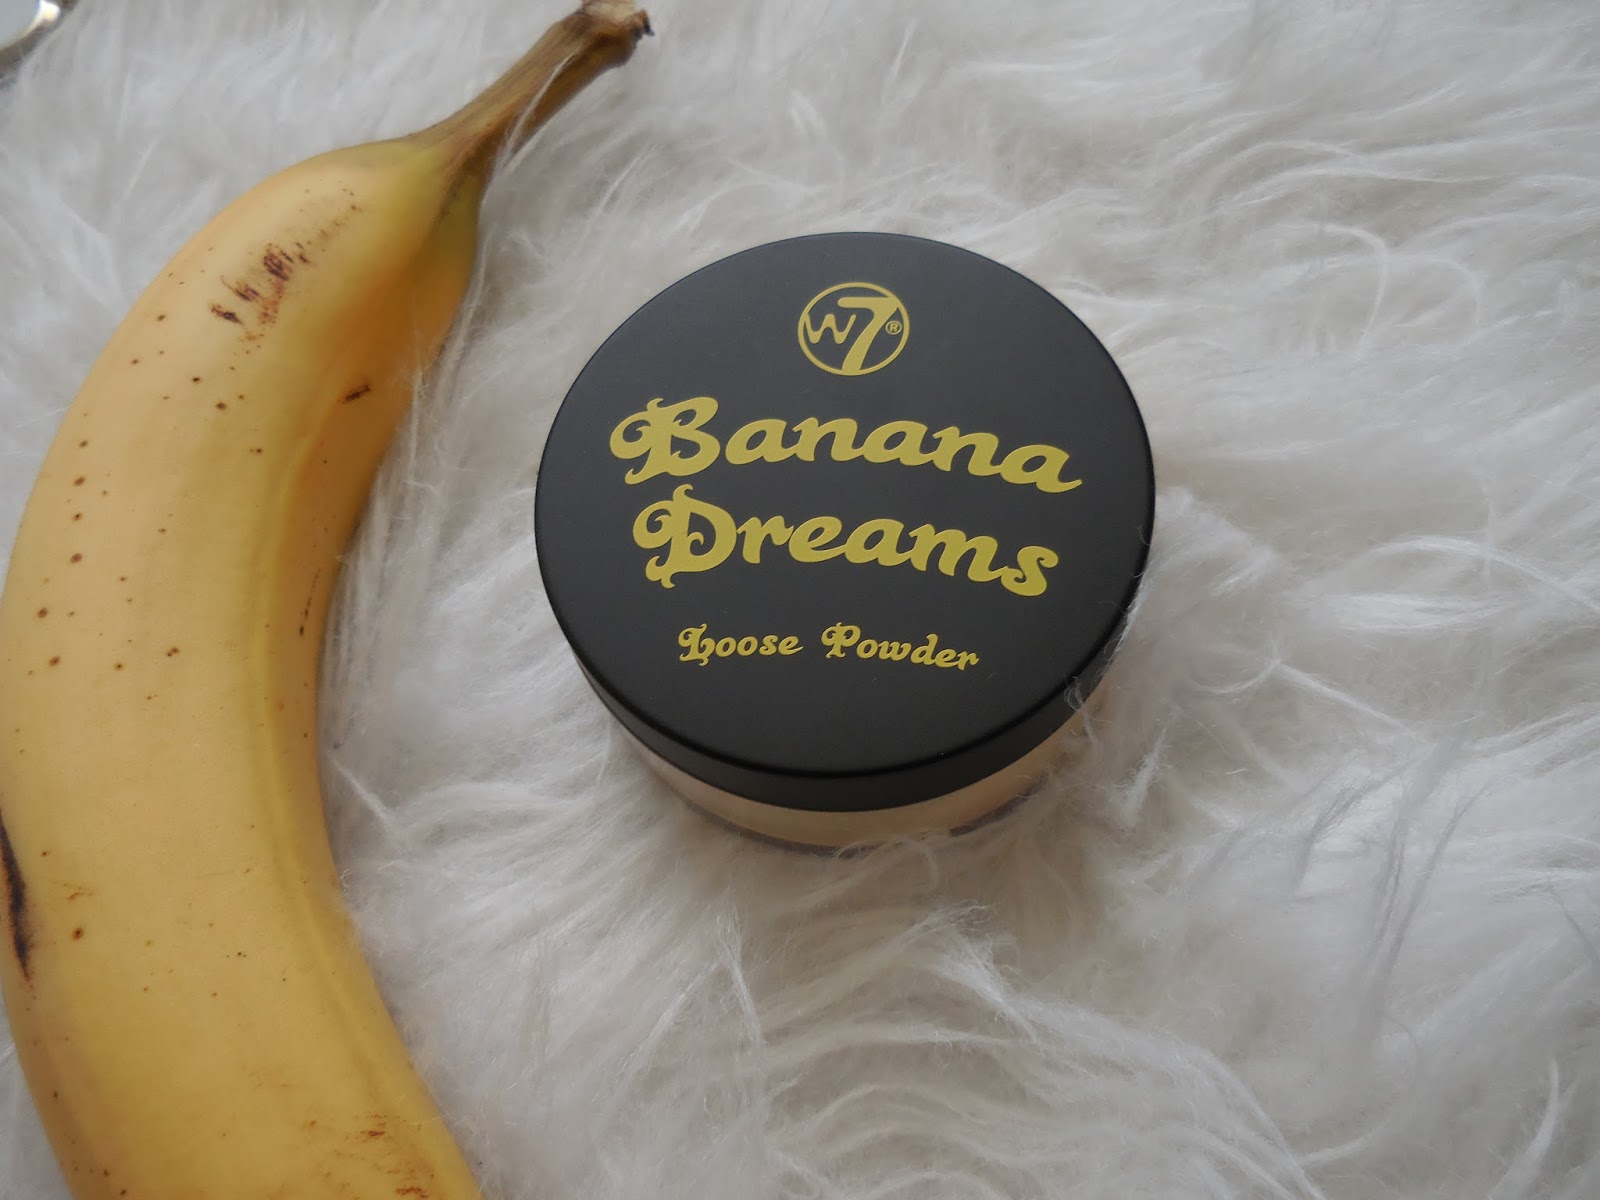 Covered beauty: W7 Banana dreams loose powder